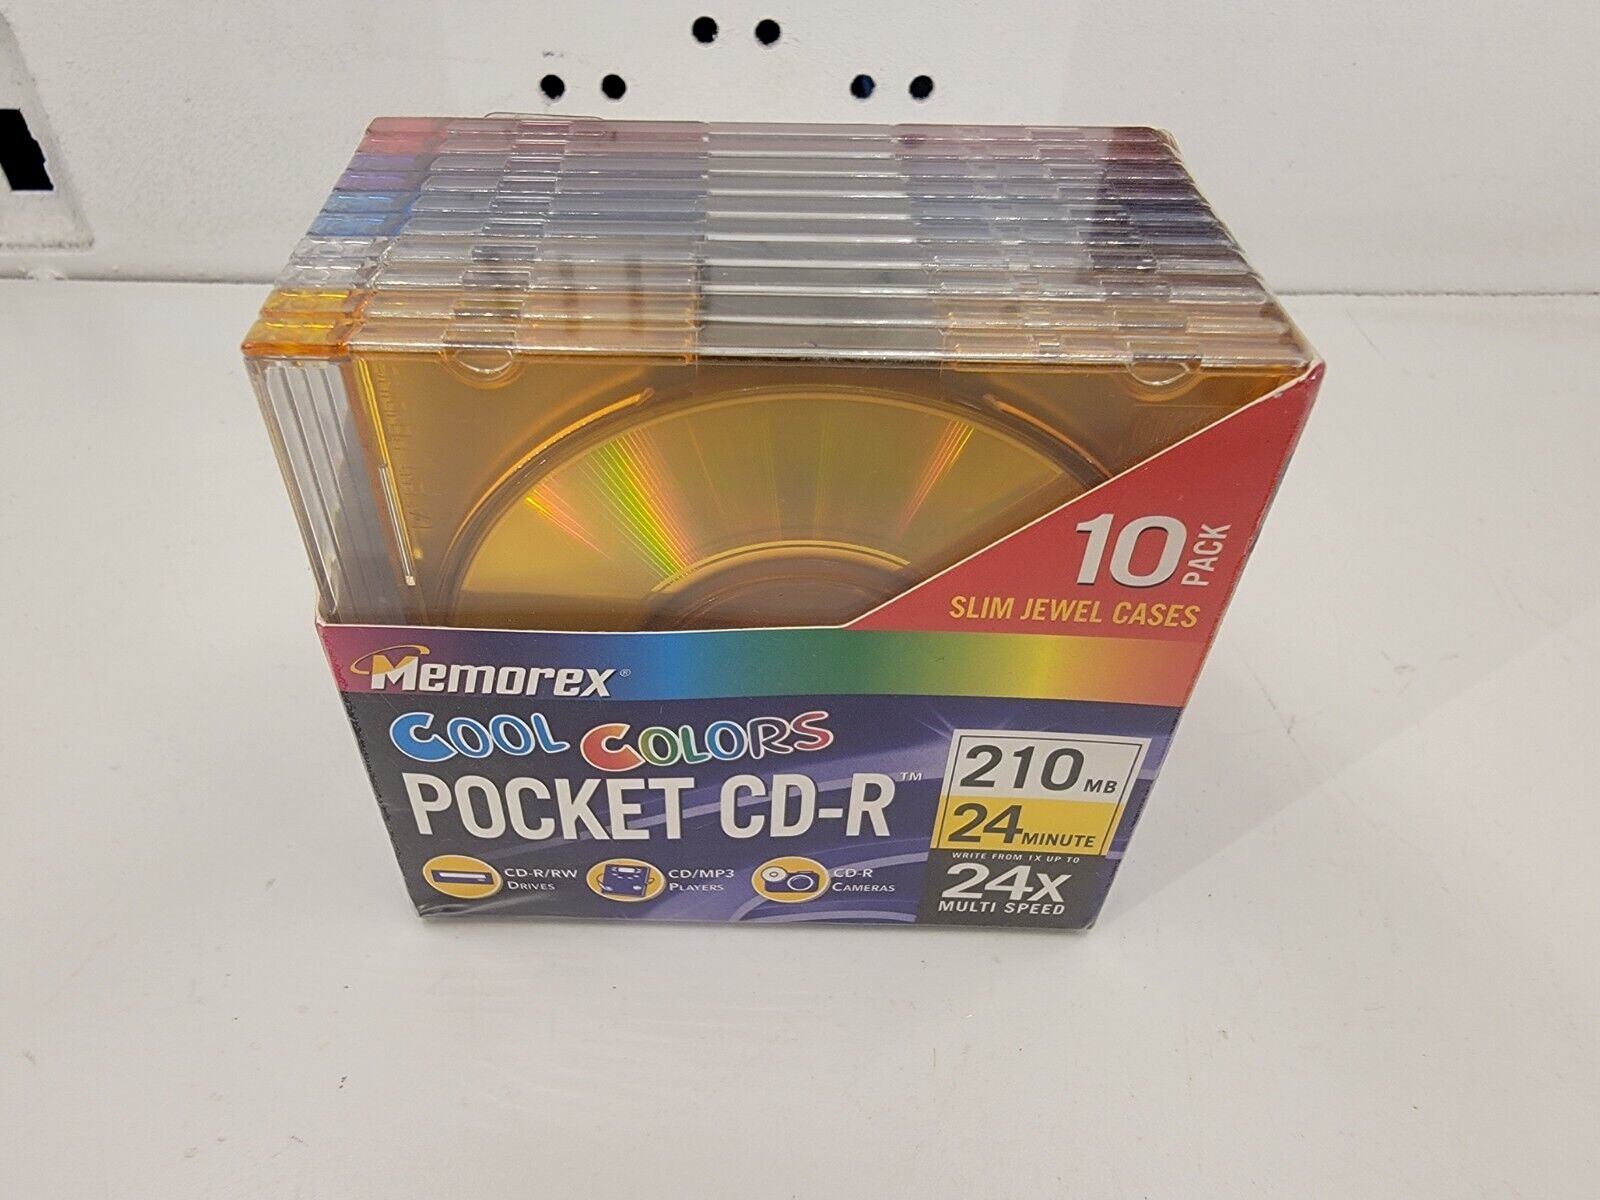 Memorex Cool Colors Pocket CD-R  210 MB, 10 Pack- 24 Min - 24x Multi Speed NOS